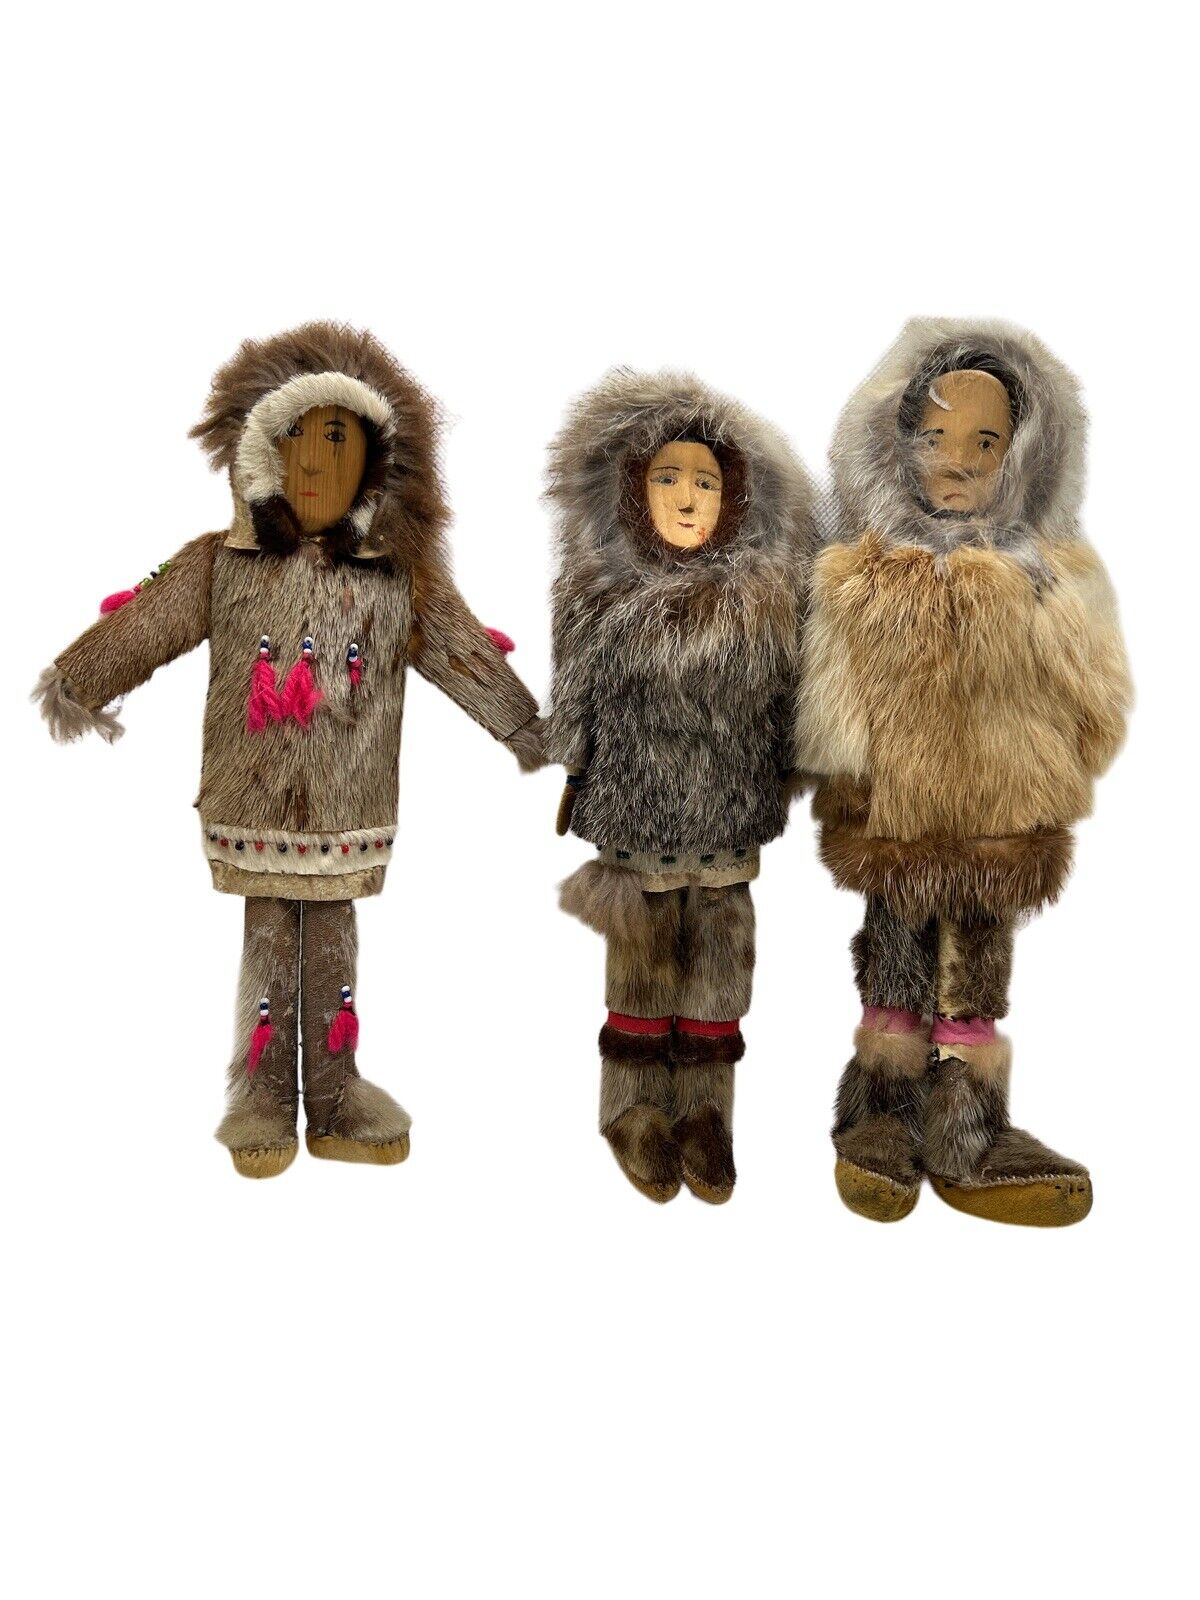 3 Vintage Alaskan Inuit Dolls Fur and Leather